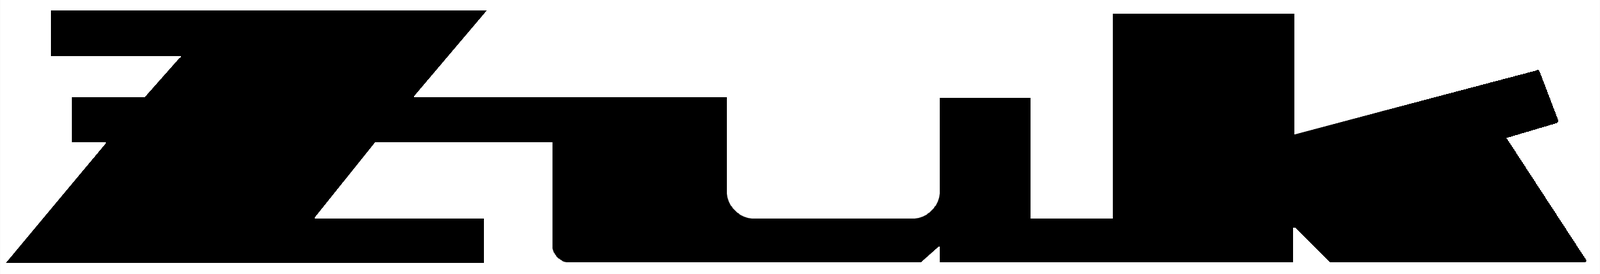 FSC Lublin Zuk logo